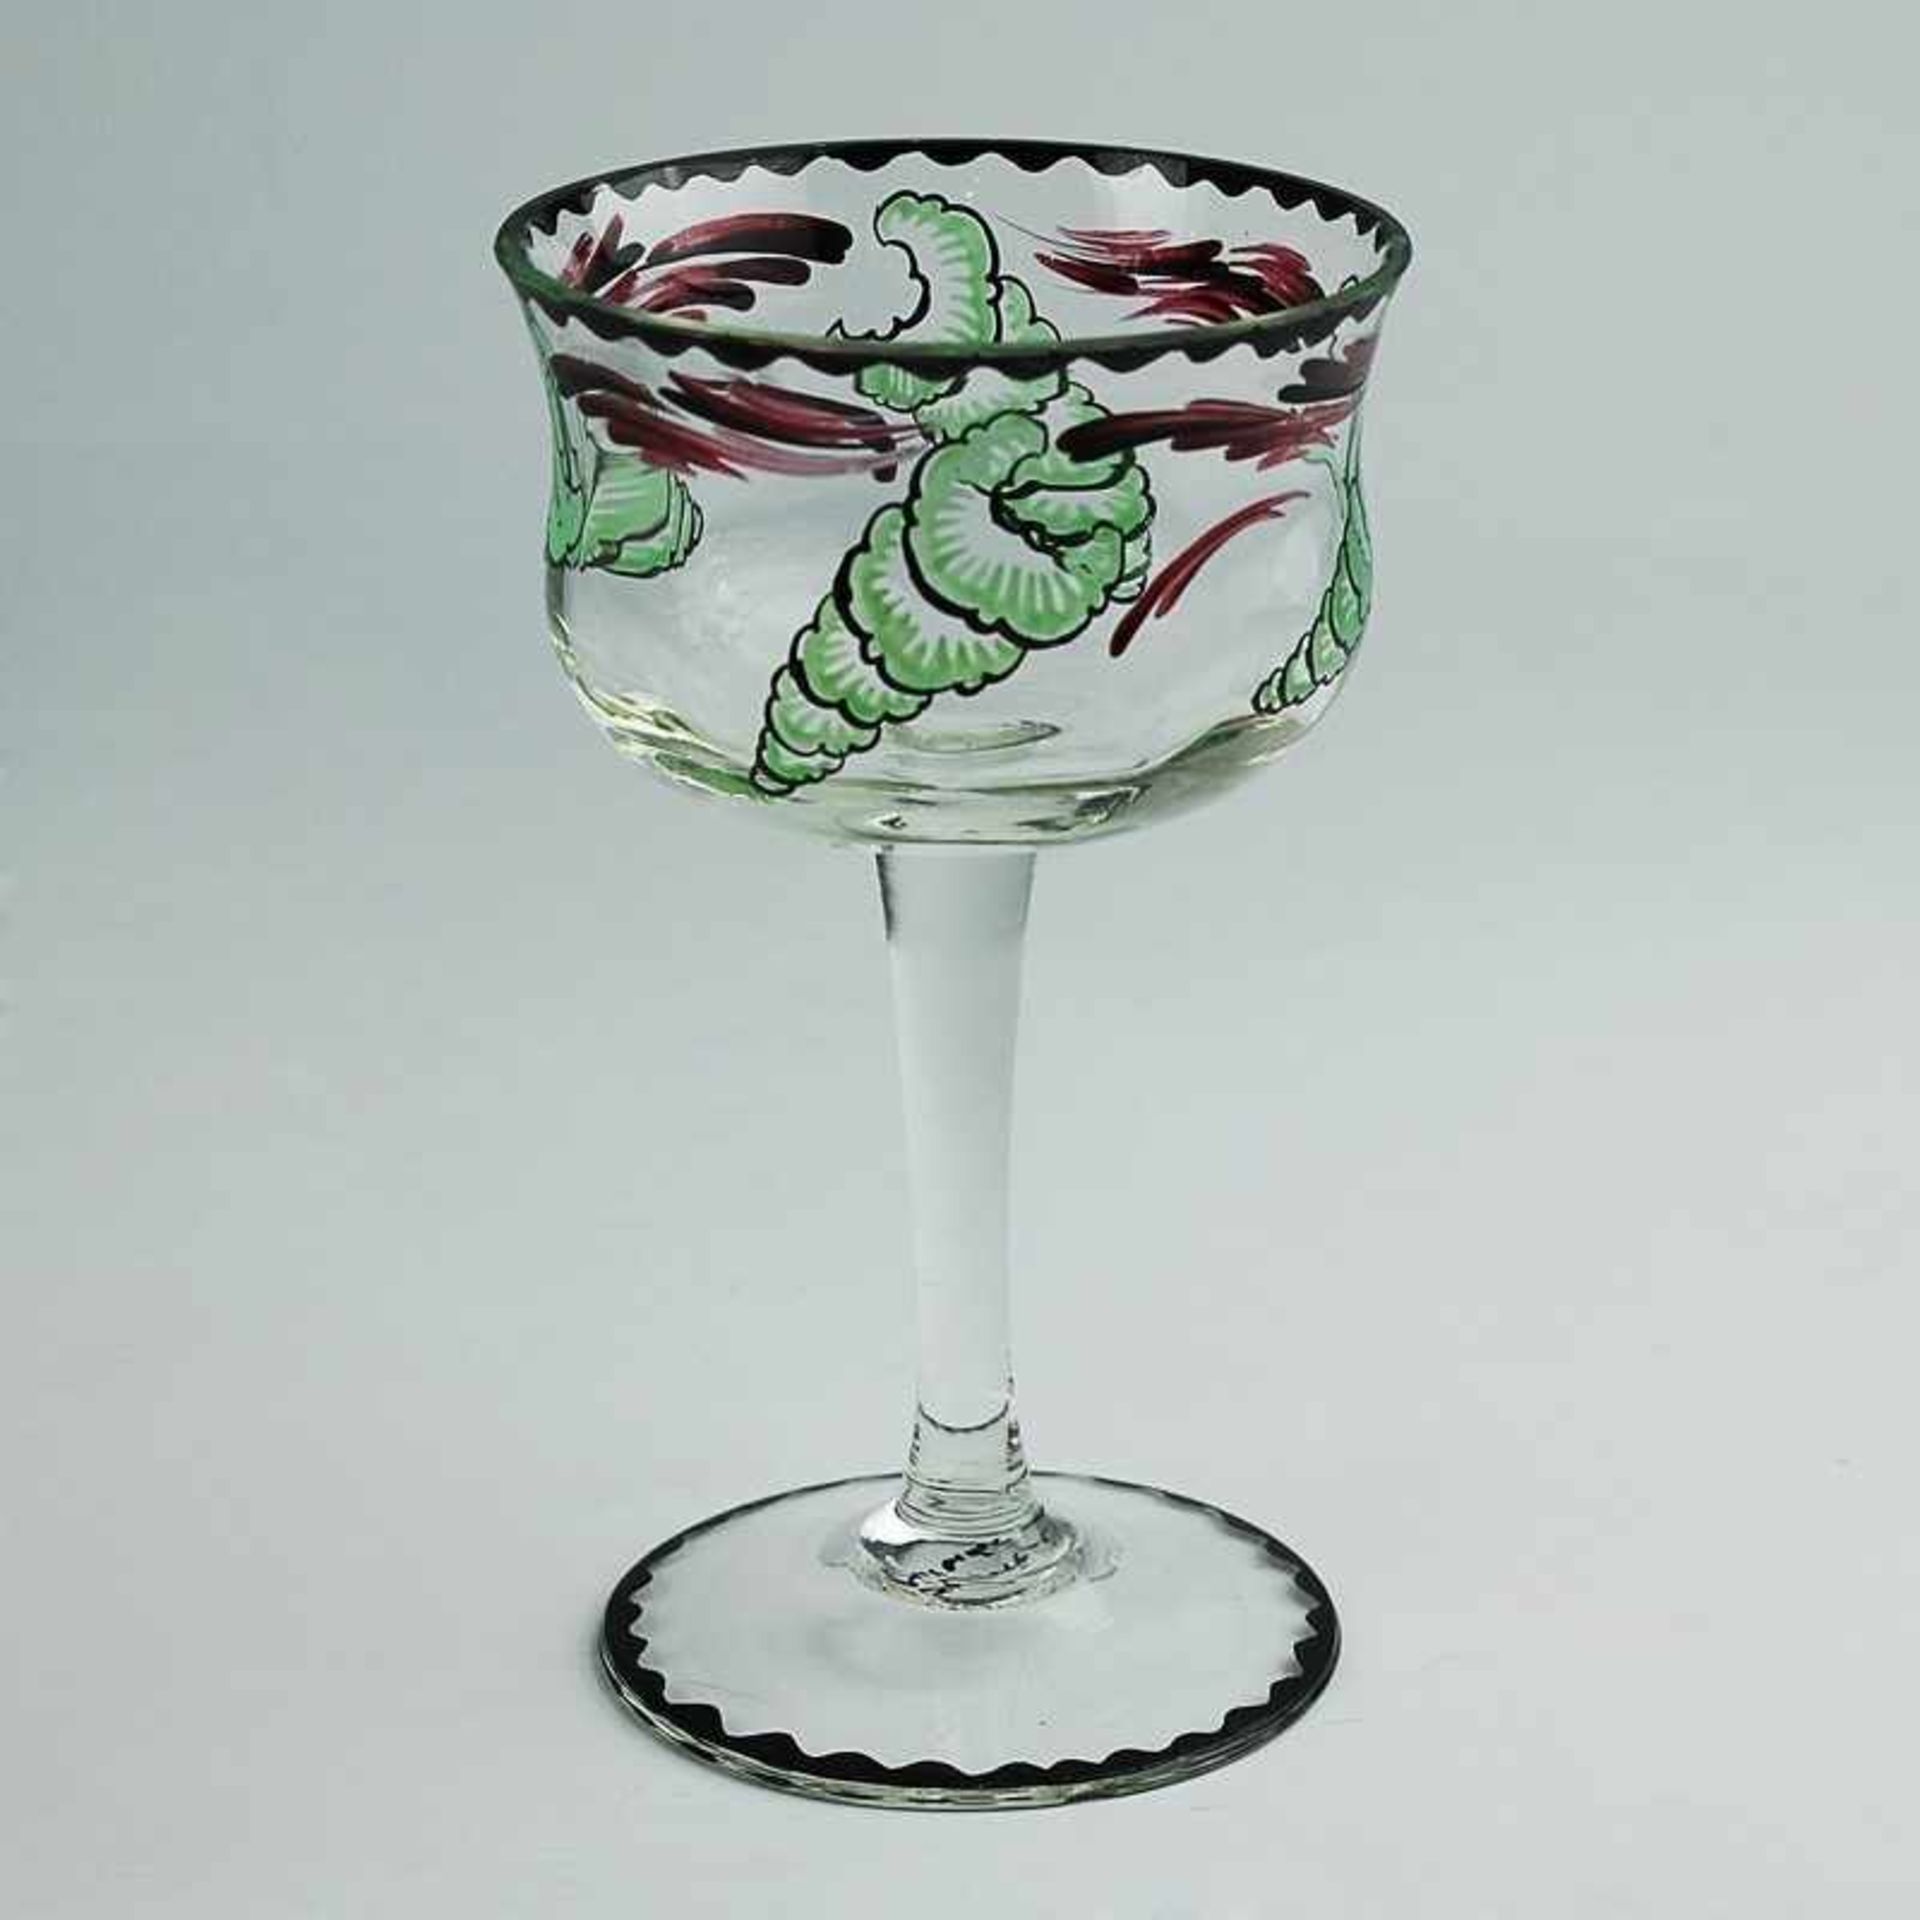 Seyfried - Weinglas um 1920, Emmy Seyfried, München, farbloses Glas, dünner Schaft, tulpenförmige